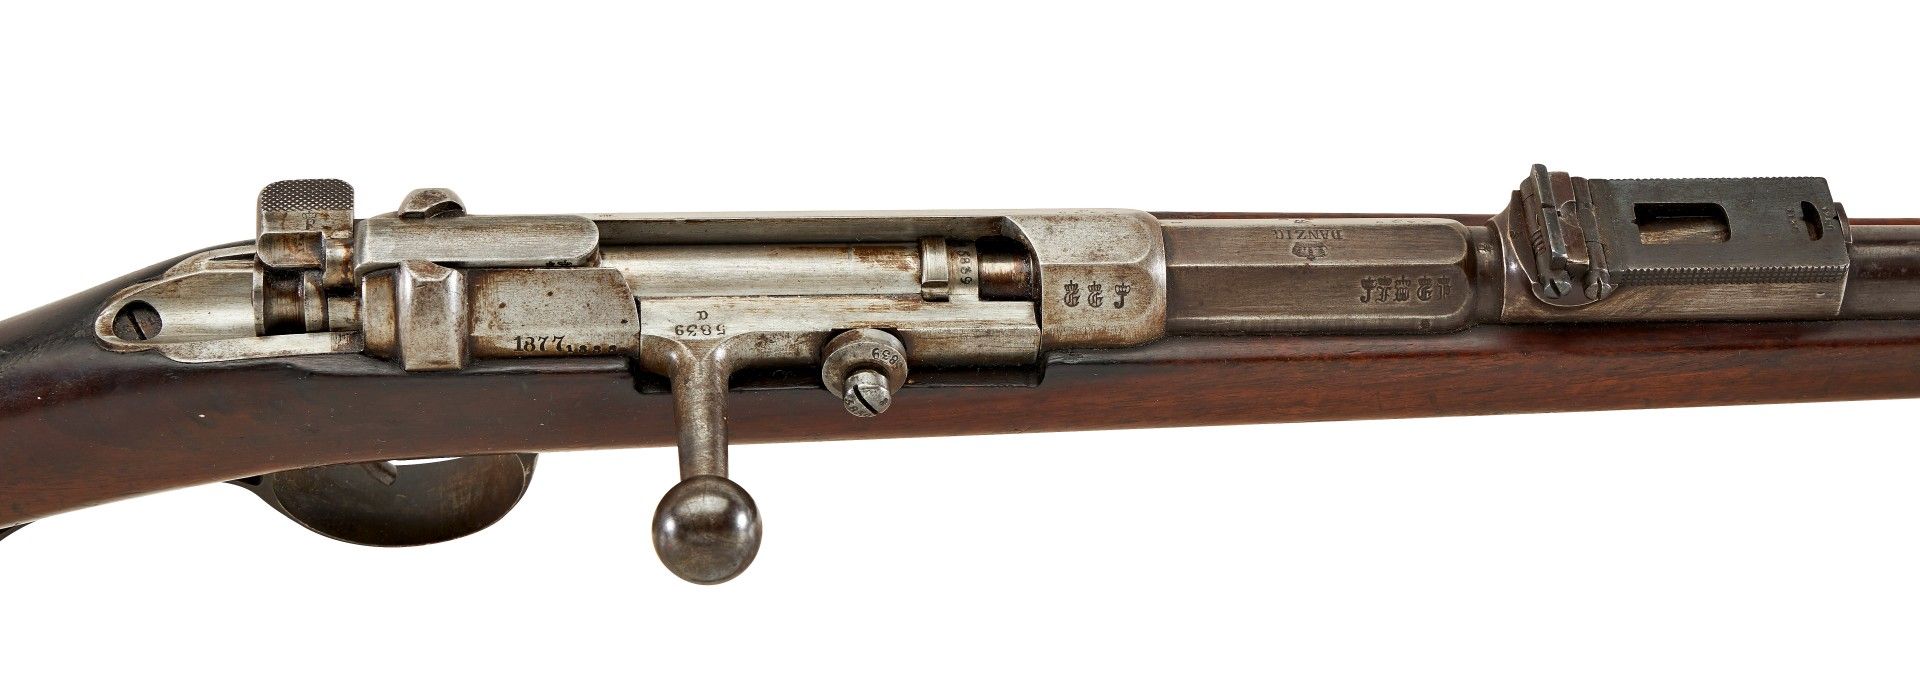 Jäger - Büchse M 71 Hersteller: Gewehrfabrik DANZIG Kal.: 11,15 x 60mm R S.Nr.: 5839 a nrgl. - Image 3 of 4